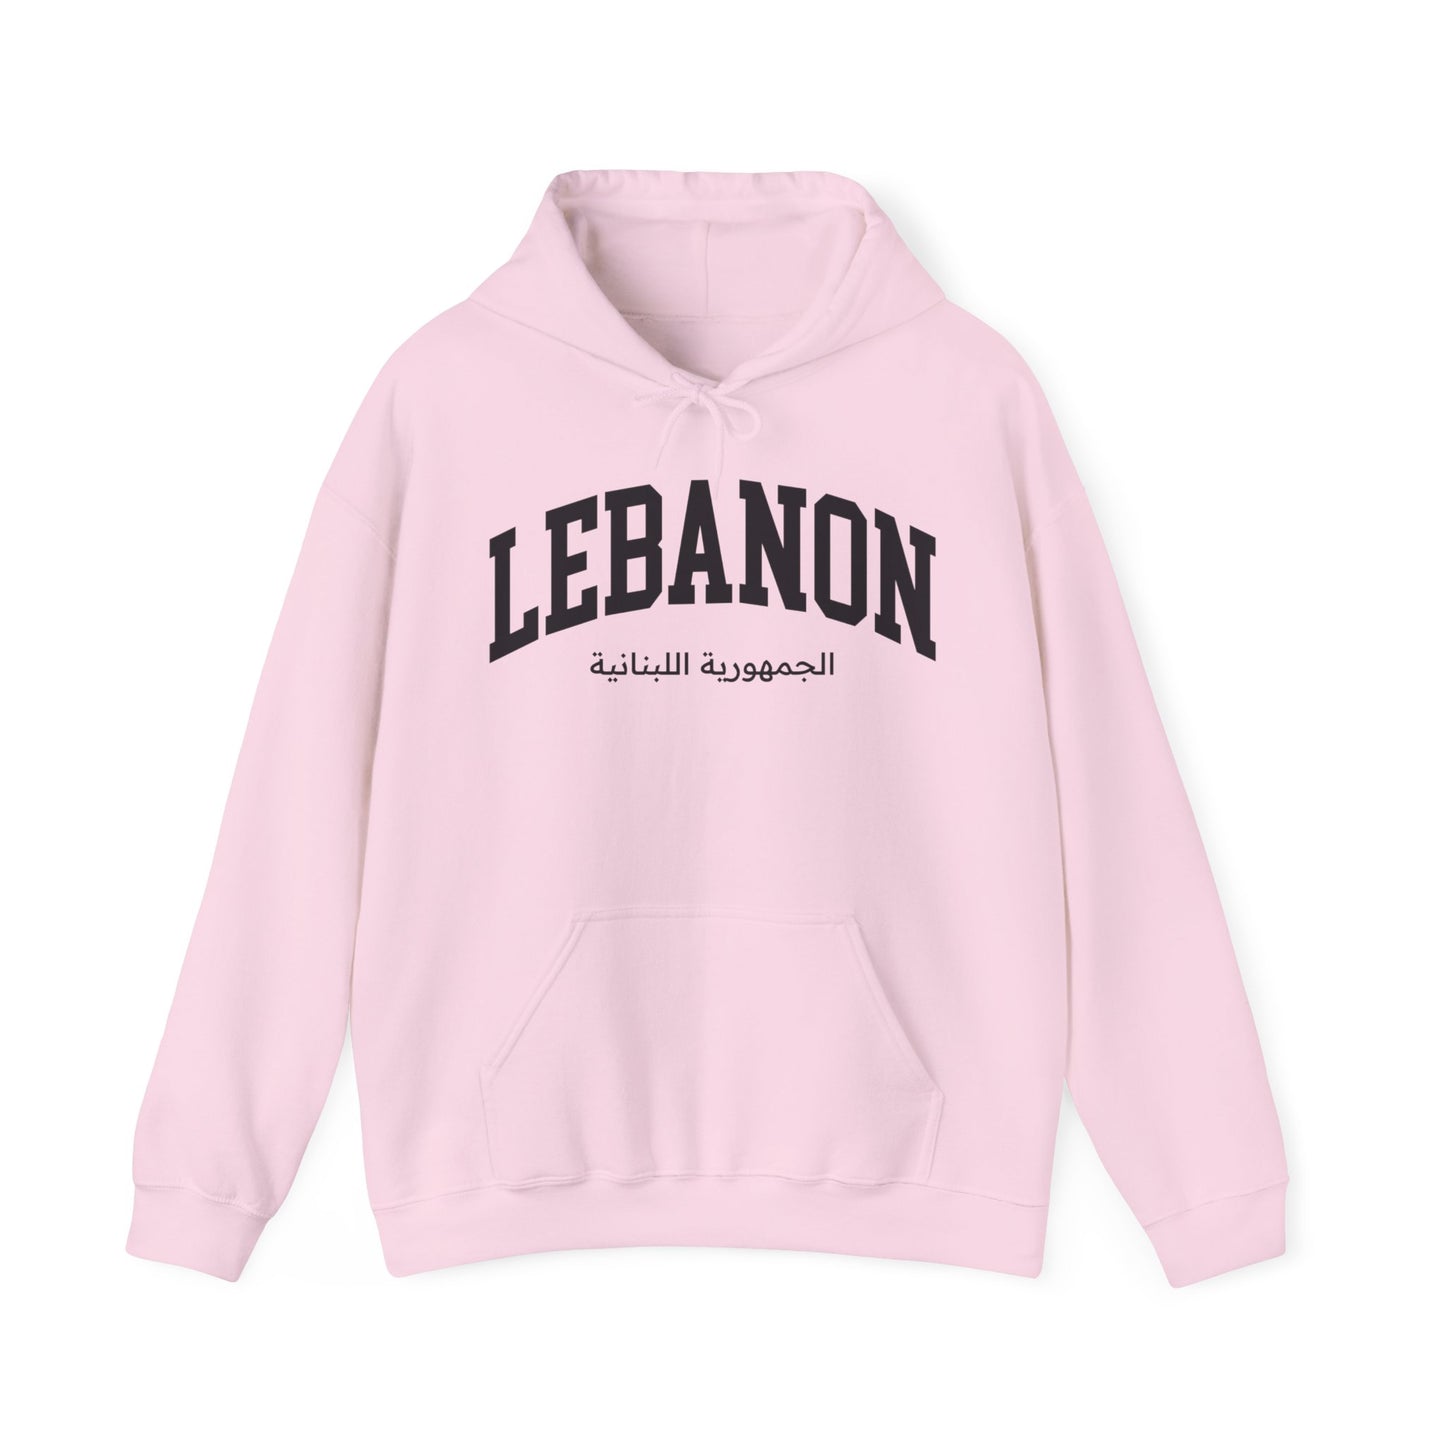 Lebanon Hoodie